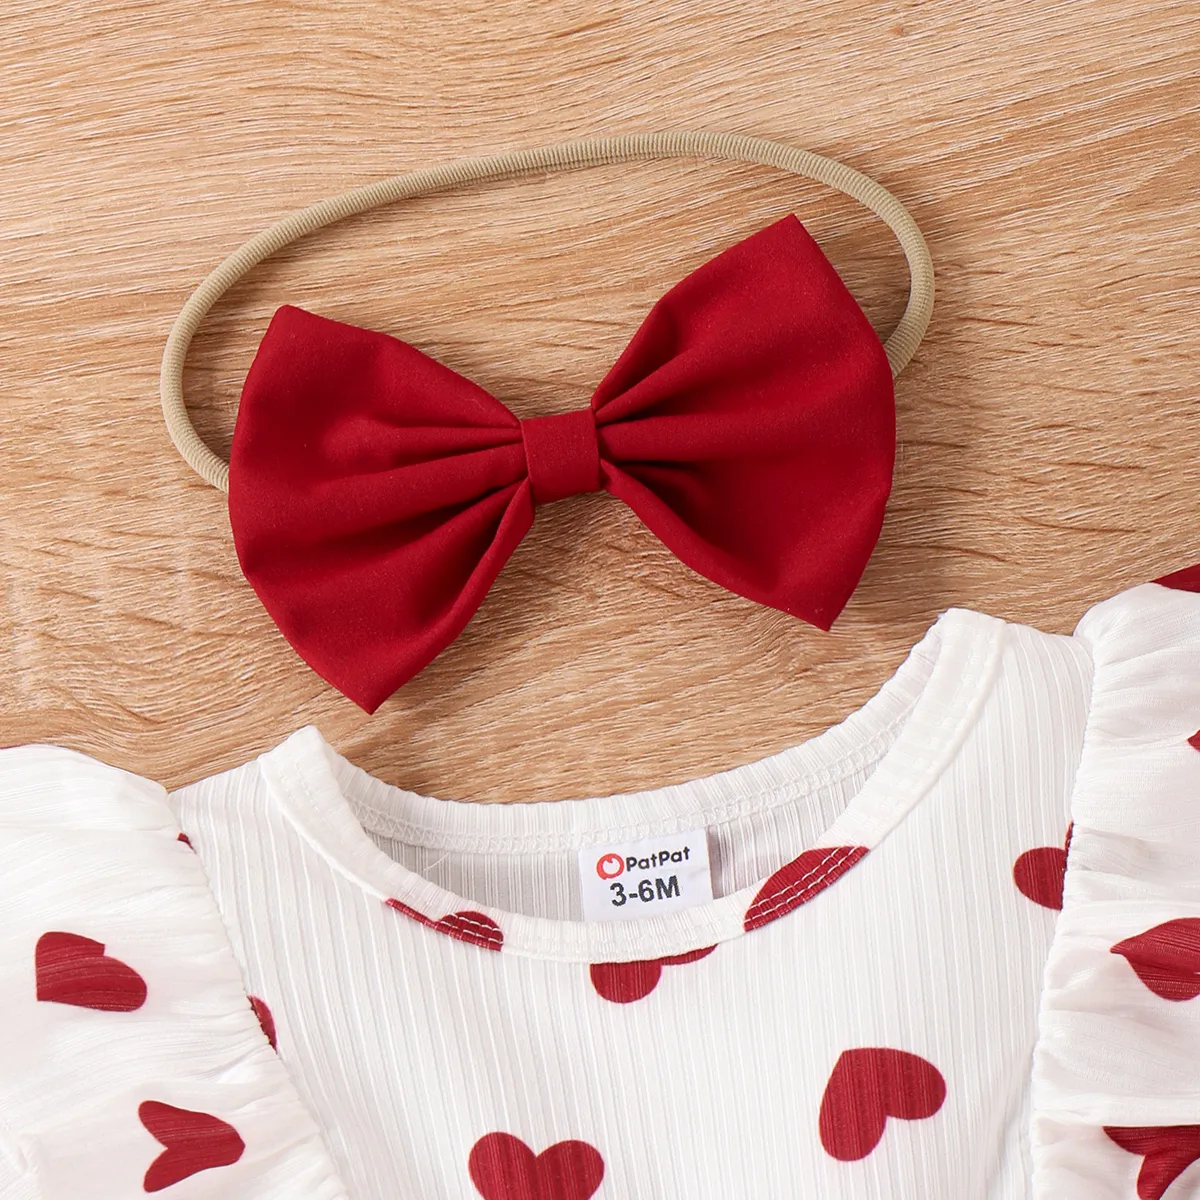 2pcs Baby Girl Heart Print Ruffled Faux-two Bowknot Dress & Headband Set WineRed big image 1